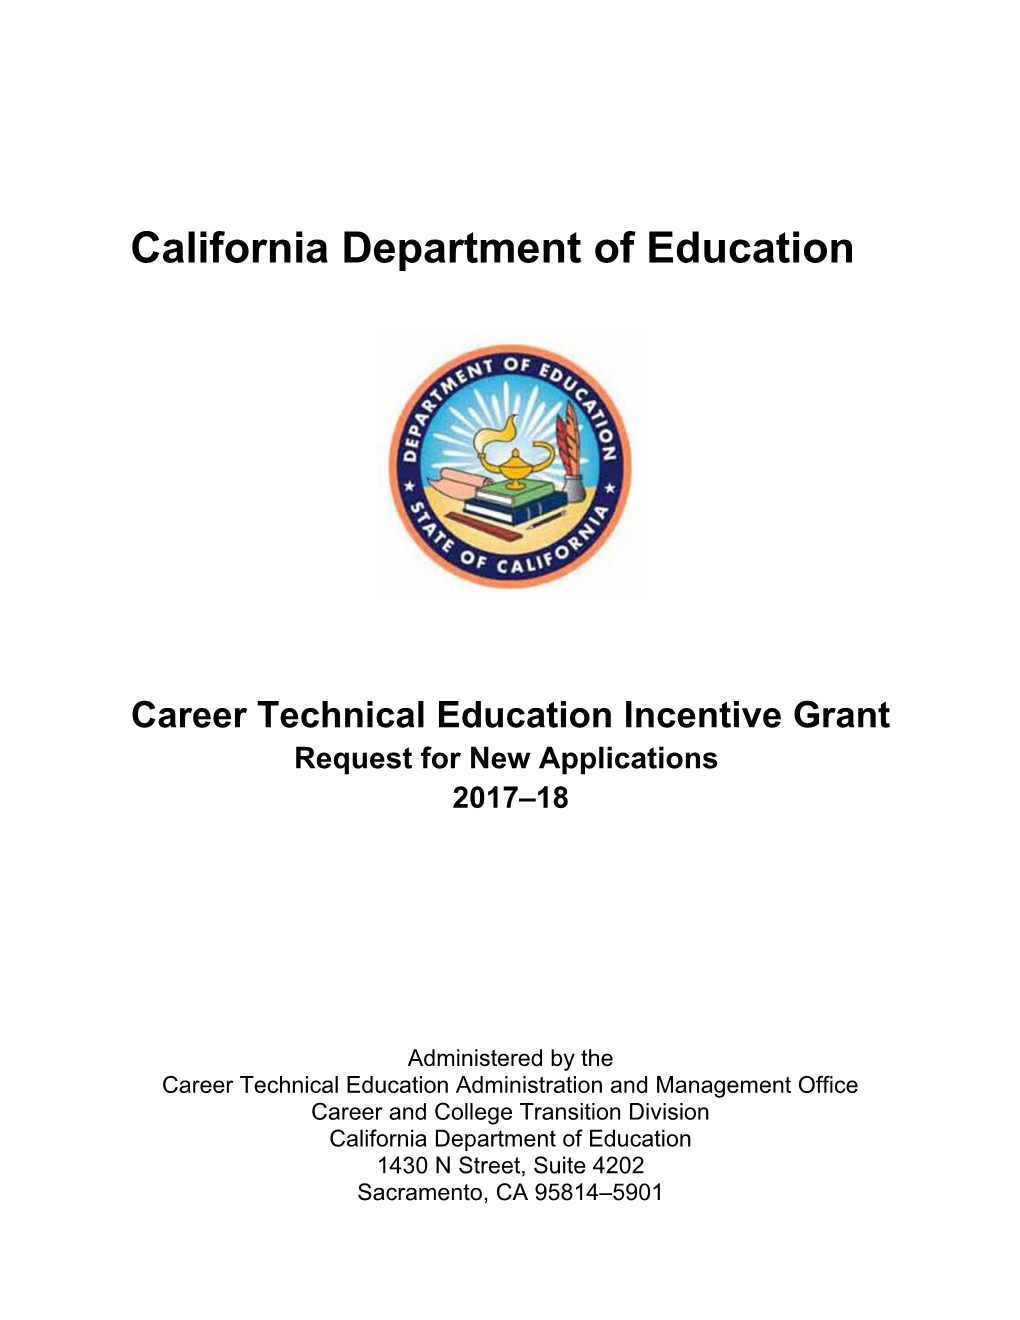 Career Technical Education Incentive Grant Program (CA Dept of Education)